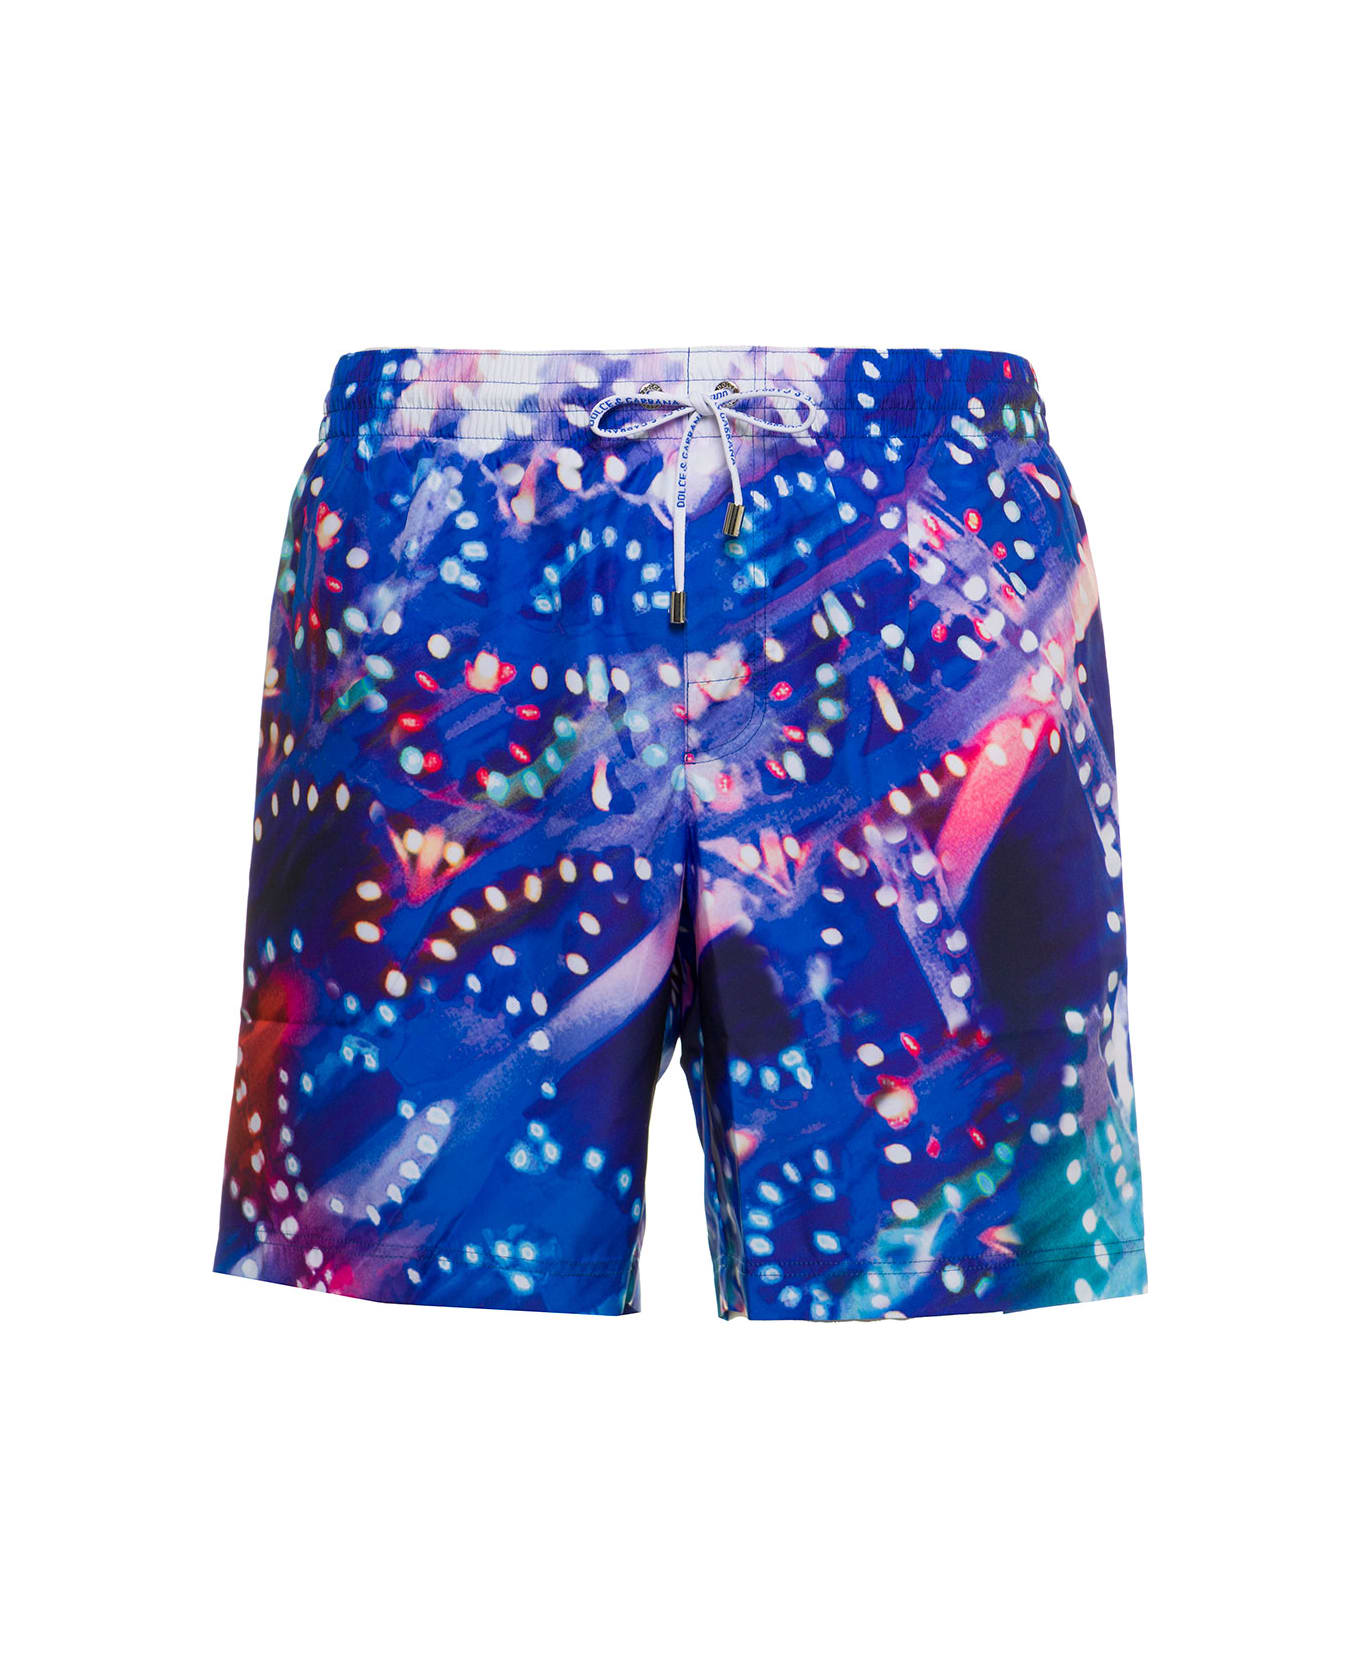 Dolce & Gabbana Man's Nylon Luminarie Printed Swim Shorts - MULTICOLOR